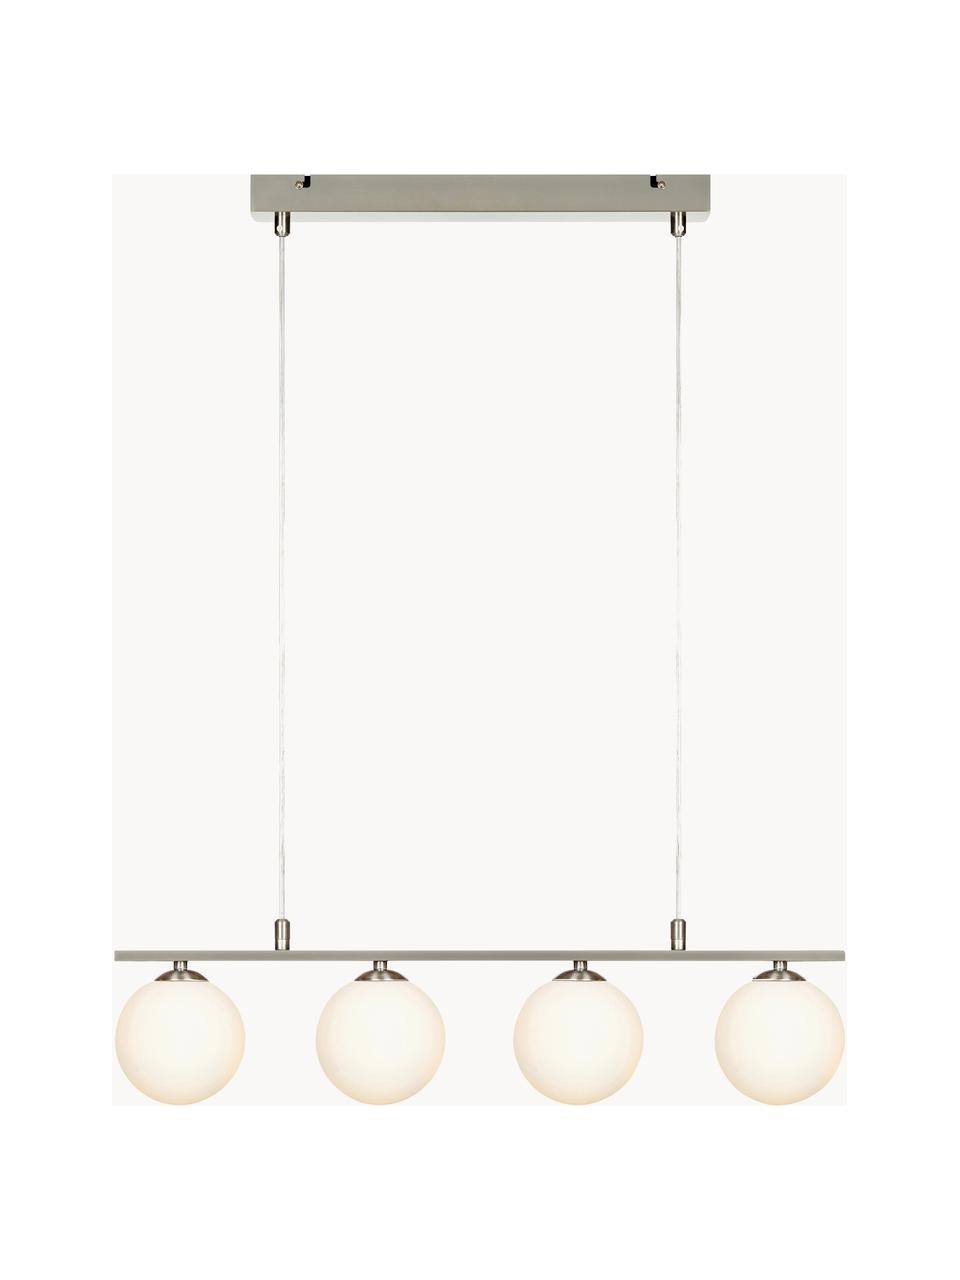 Závěsné svítidlo Quattro, Opálově bílá, stříbrná, Š 66 cm, V 17 cm